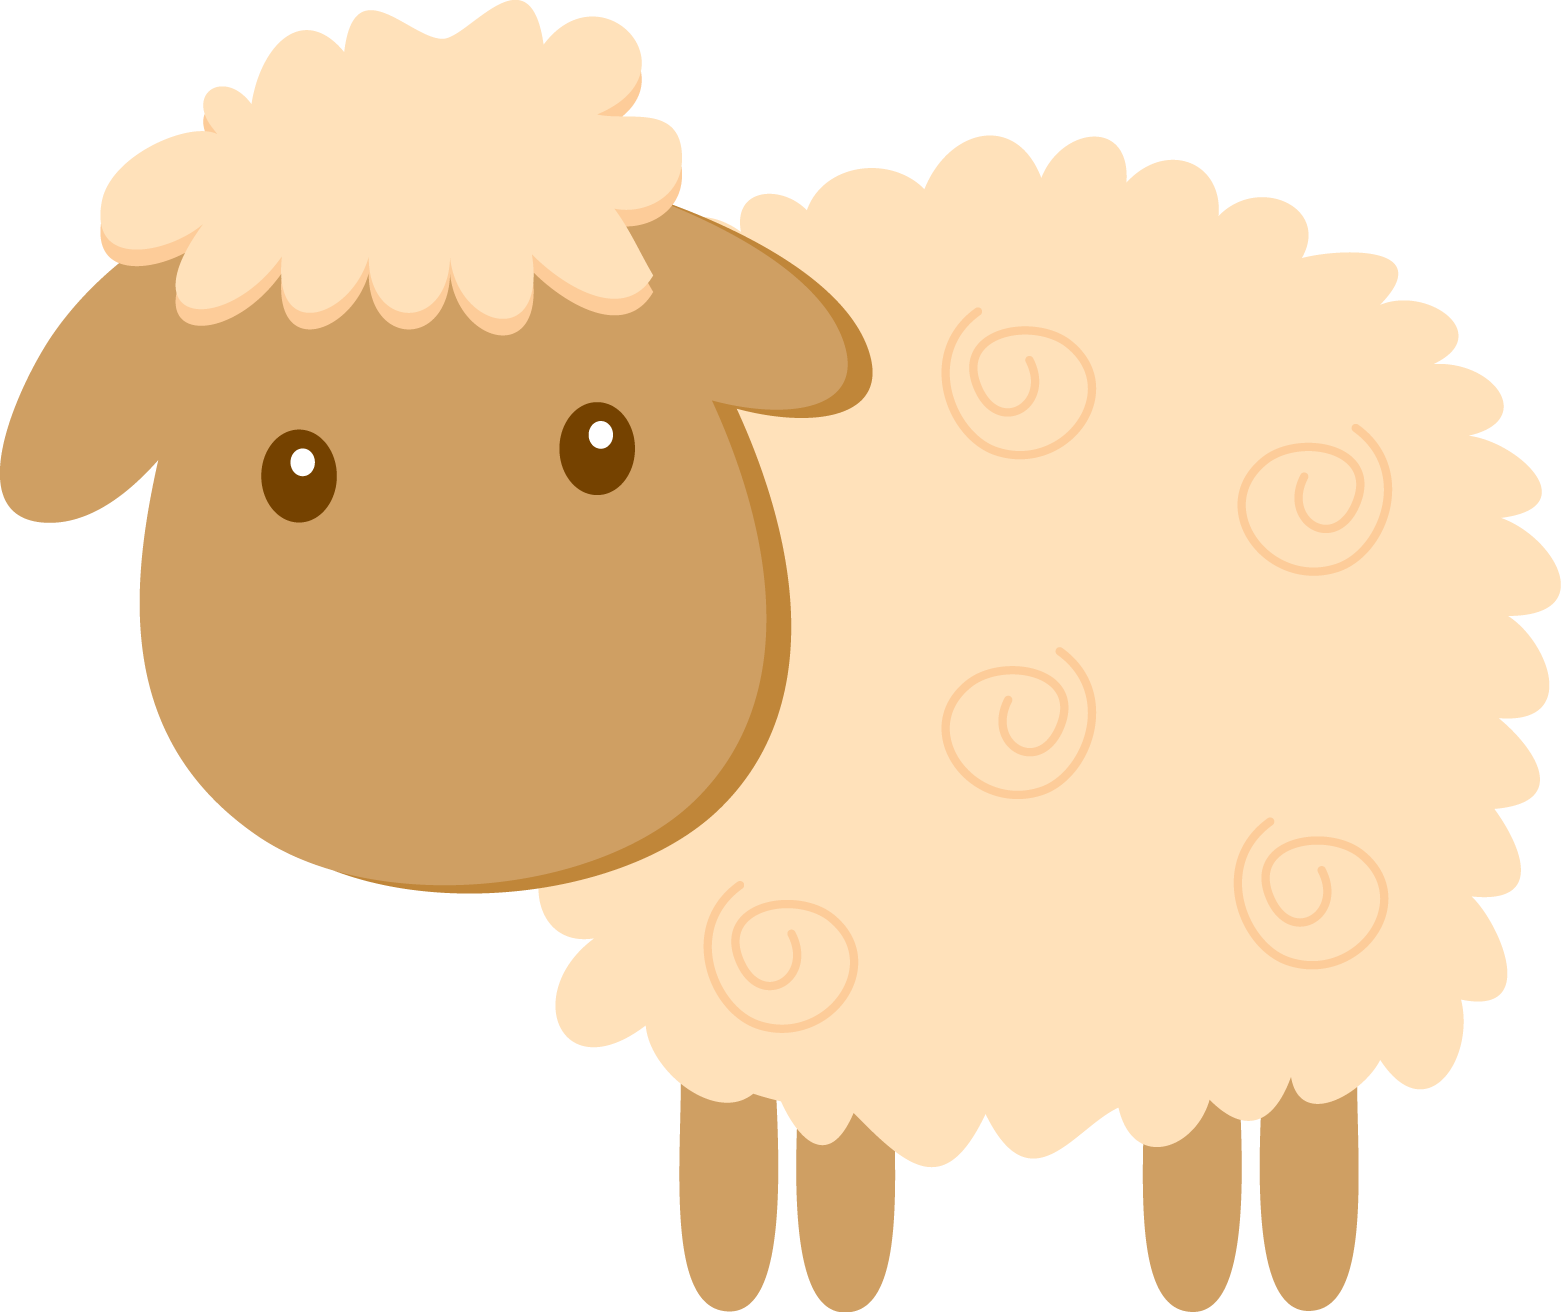 Farmers sheep farmer